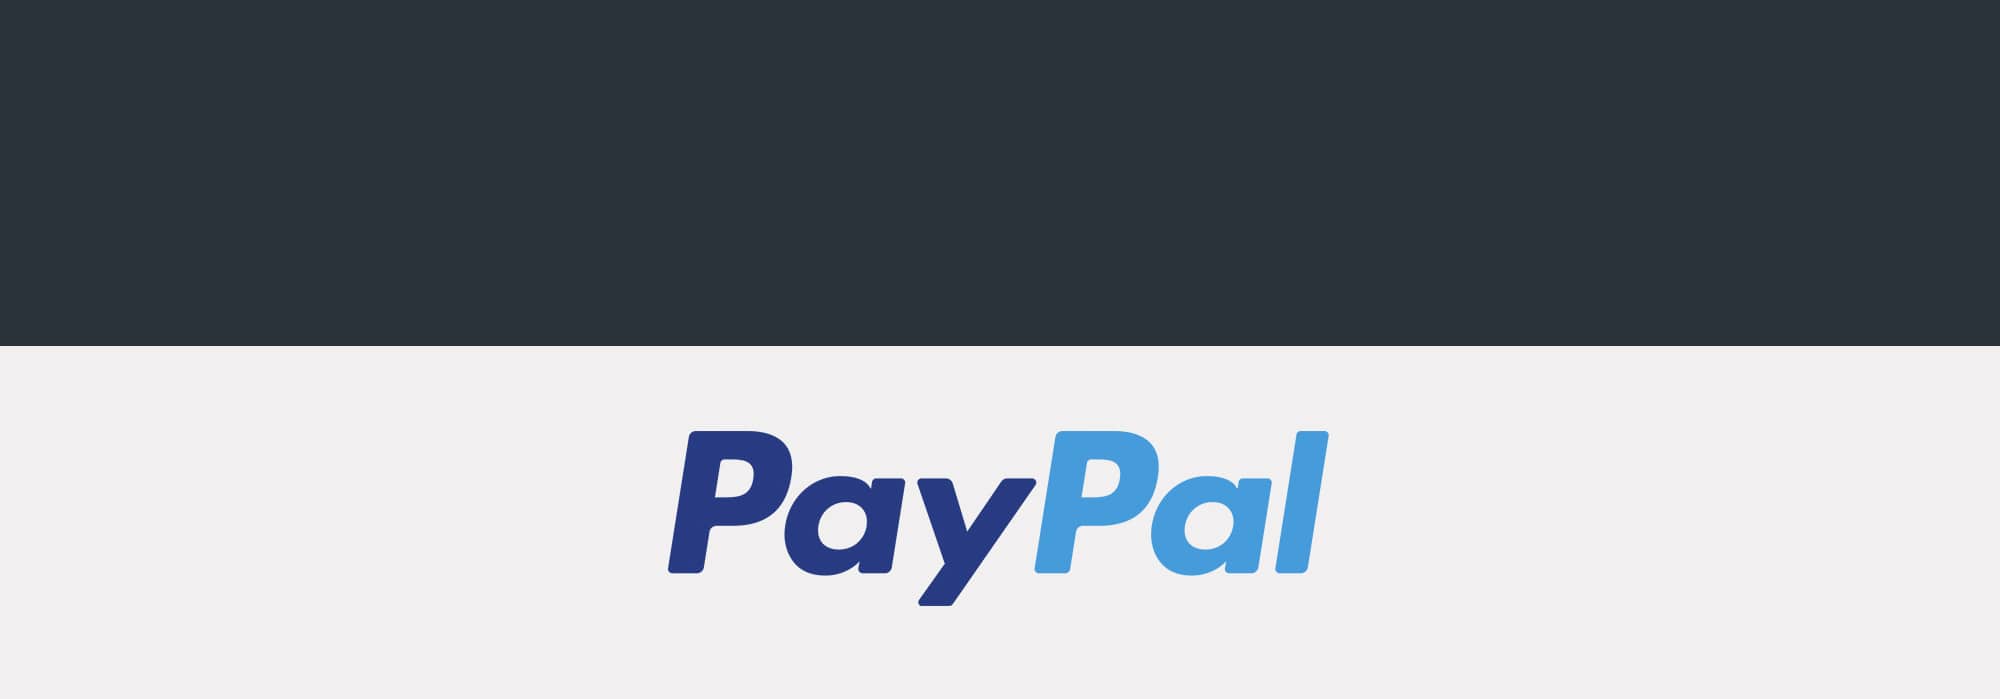 جلوگیری از هک شدن پی پال PayPal